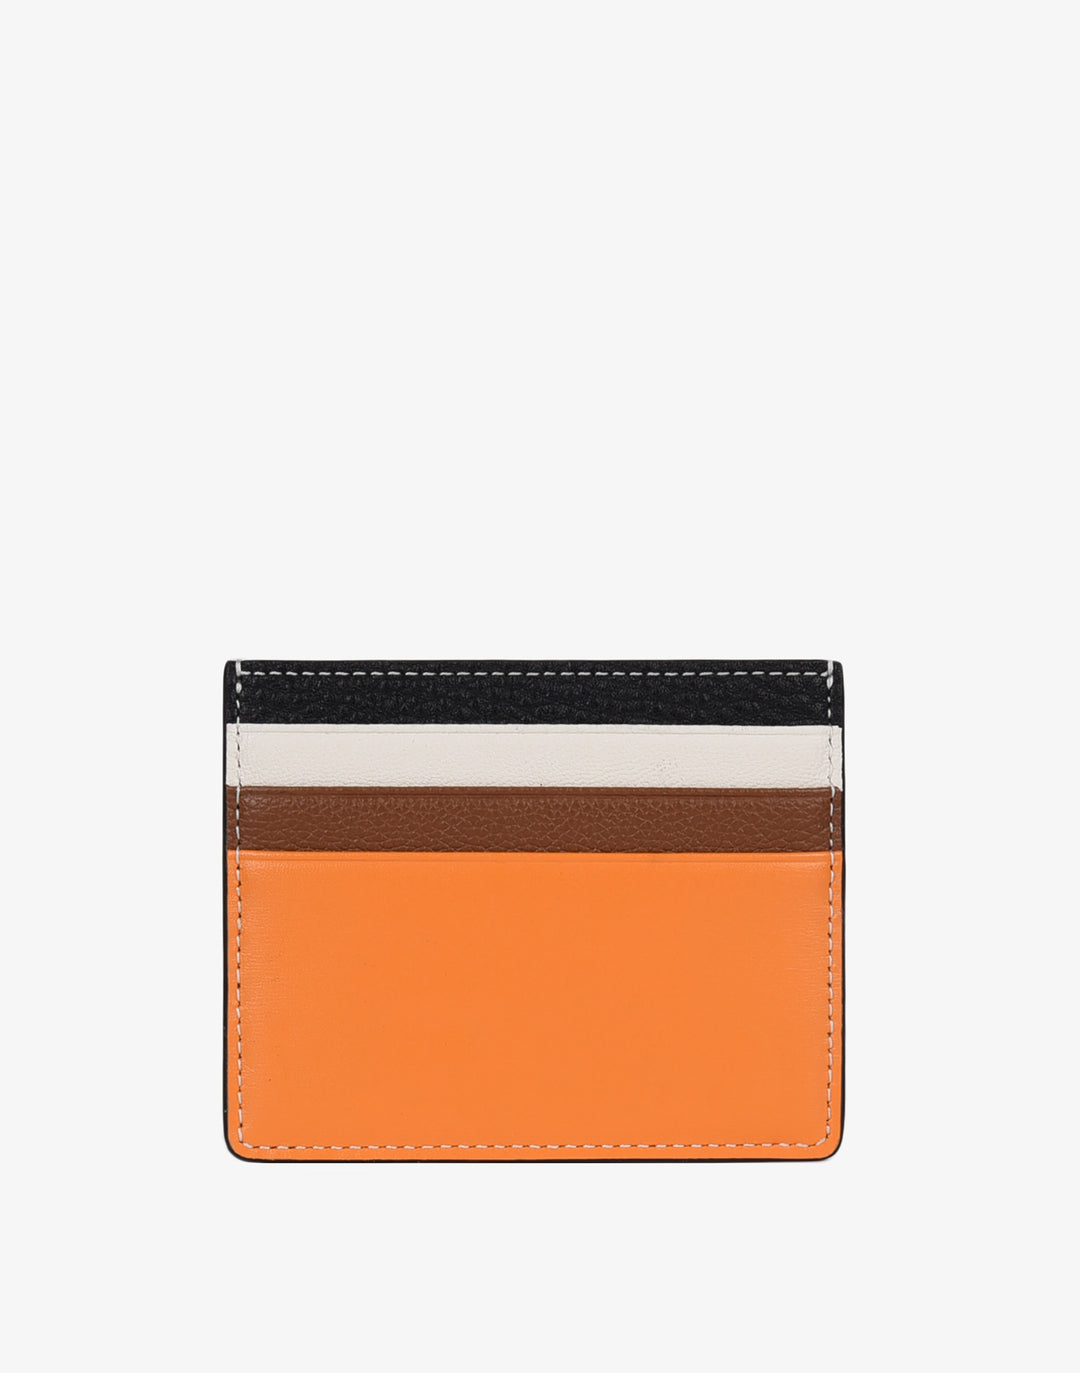 Hyer Goods_Card Wallet_Orange Colorblock#color_orange-colorblock